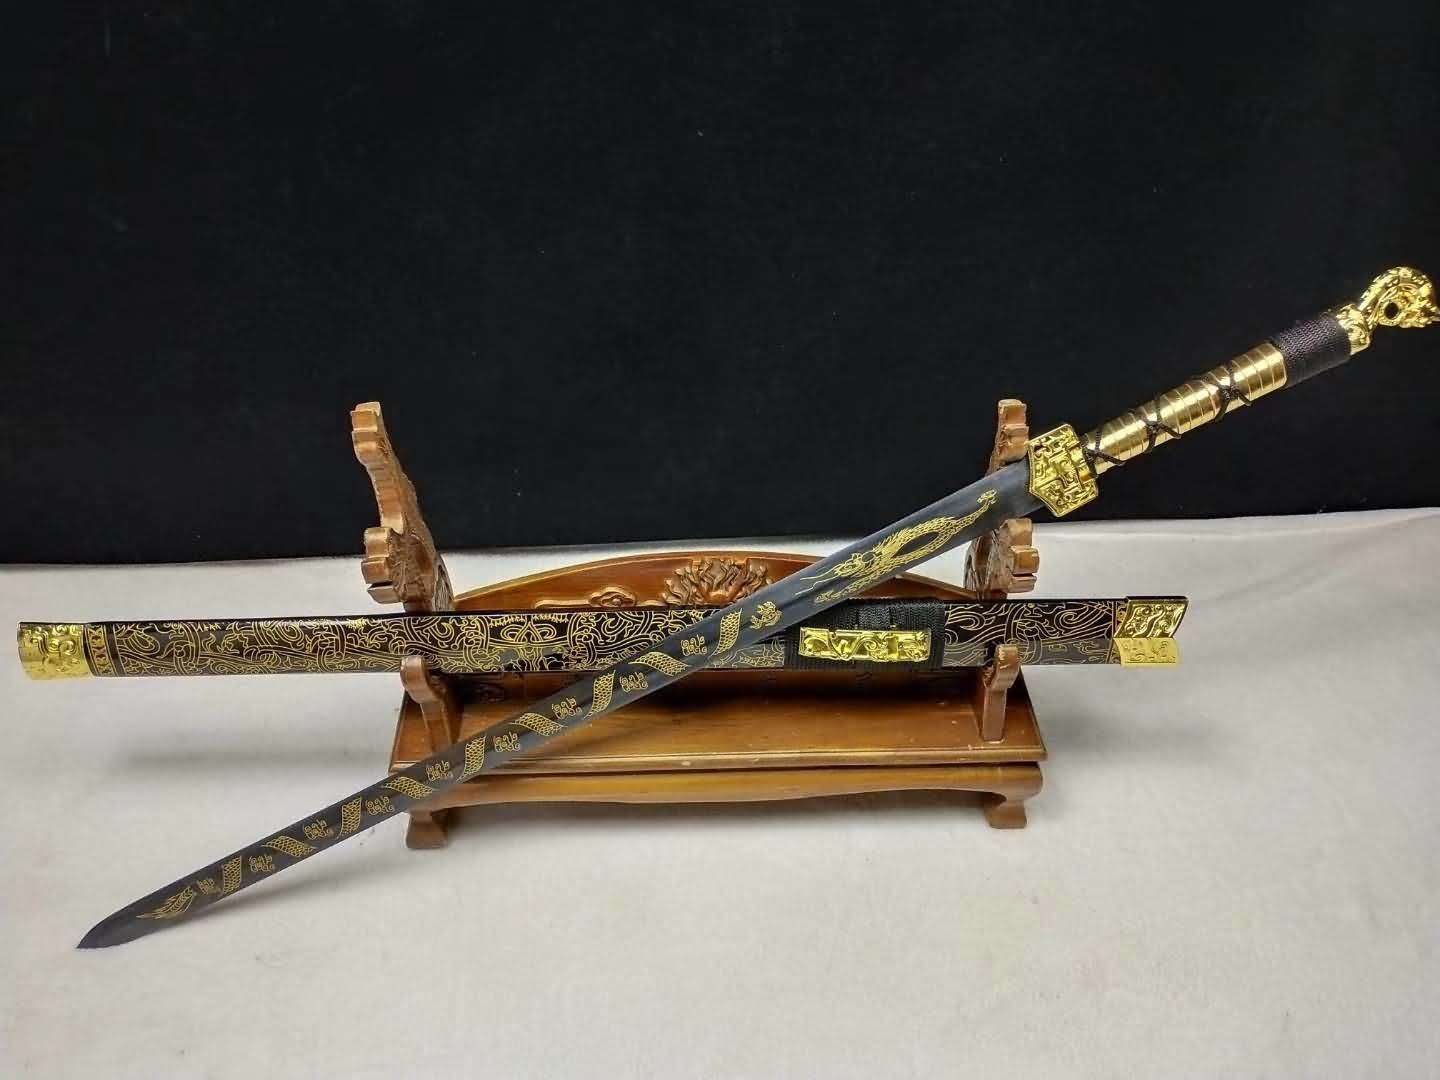 Dragon han jian,Medium carbon steel etch blade,Alloy fittings - Chinese sword shop